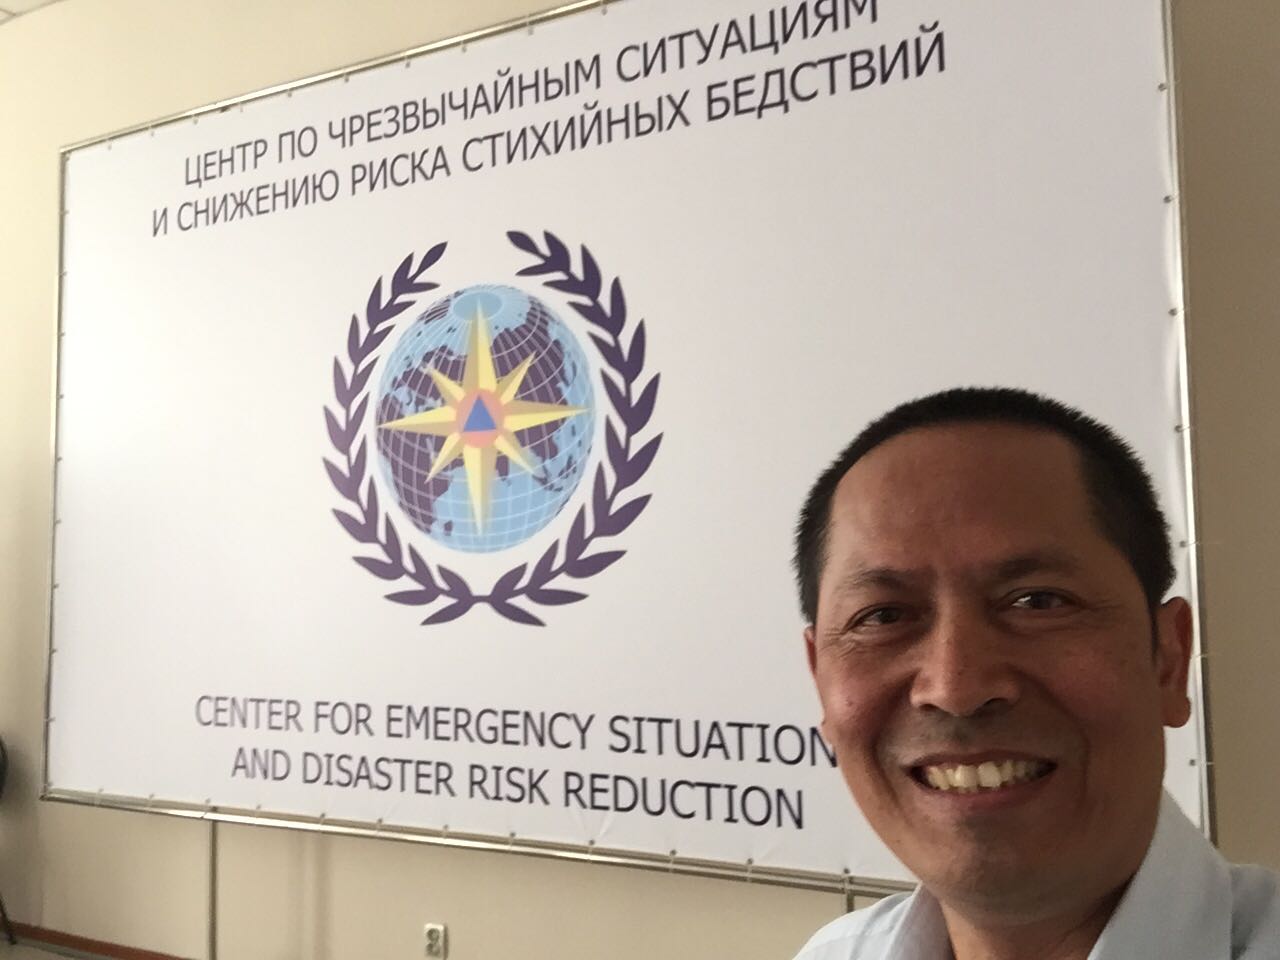 Regional Adviser in Kazakhstan